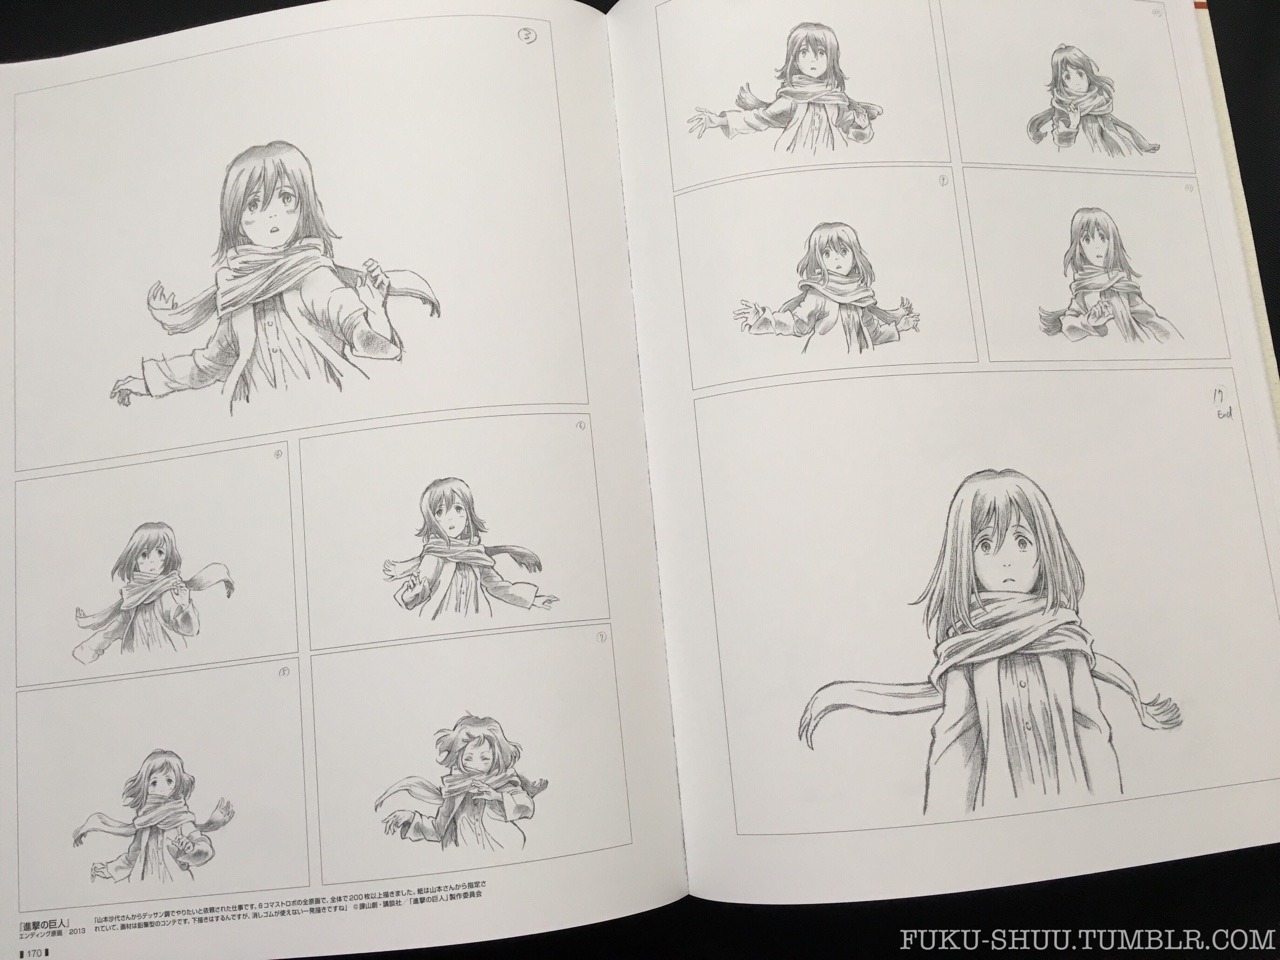 fuku-shuu: From my copy of The Art of Tadashi Hiramatsu - the renowned animator (Also